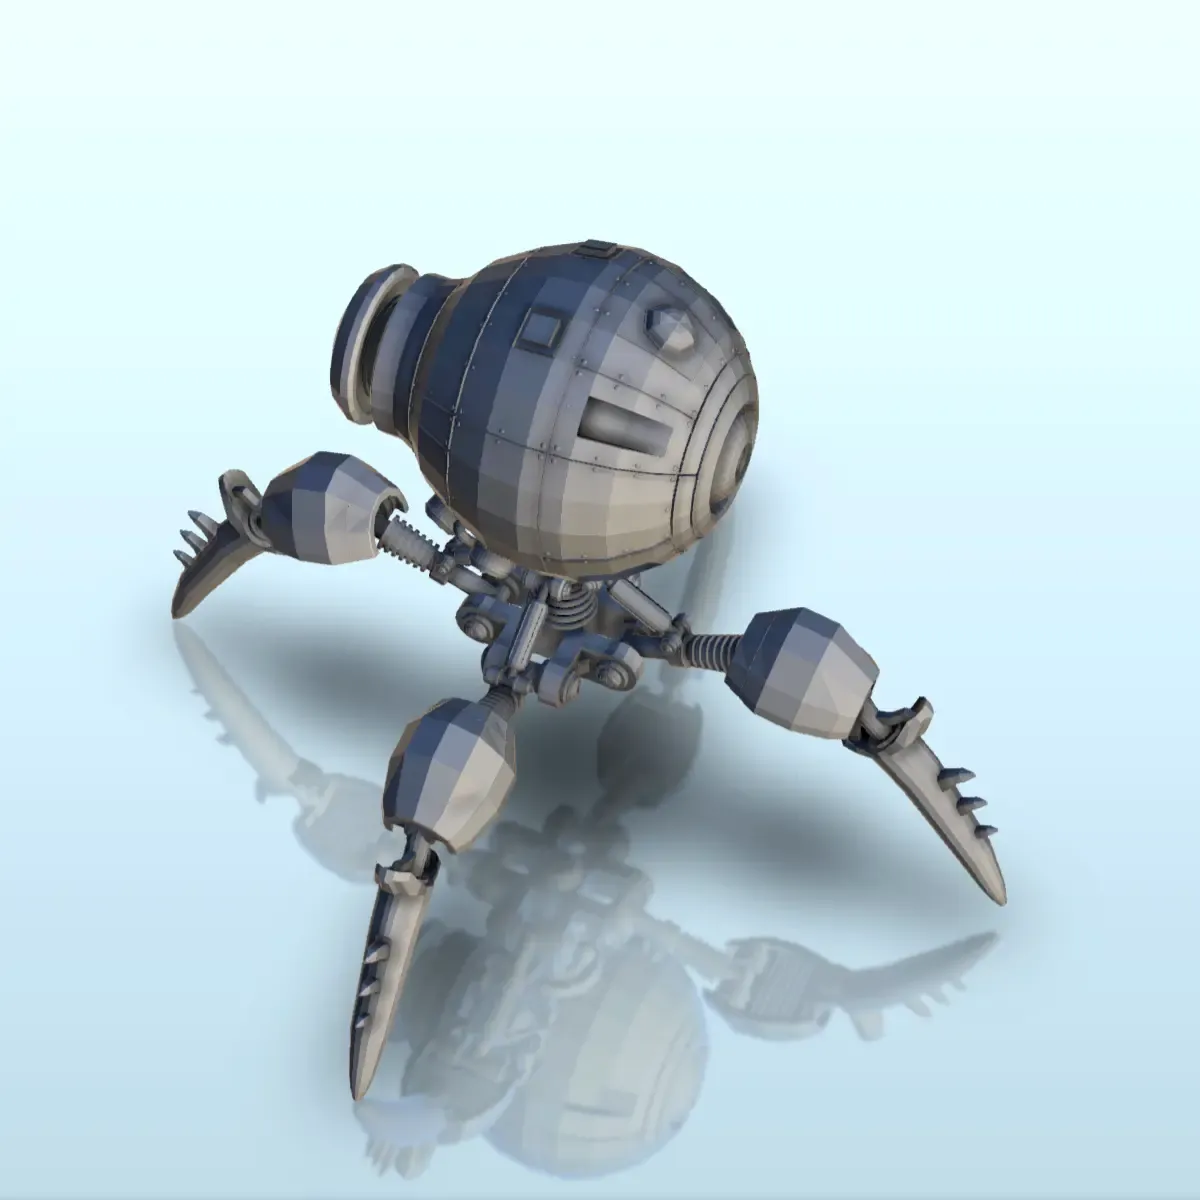 Utia combat robot (26) - sci-fi science fiction future 40k b